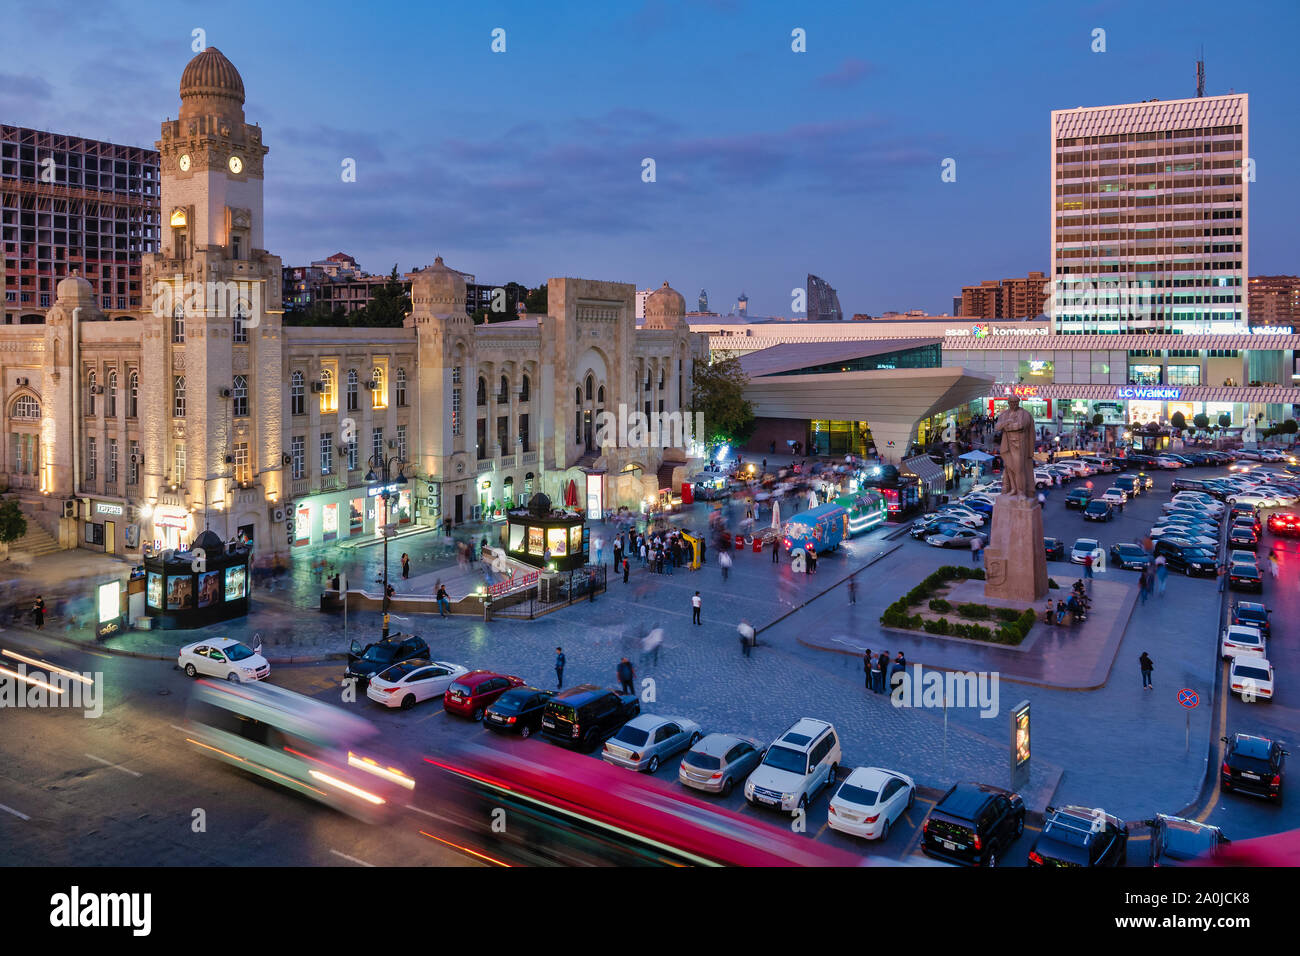 28 may square, Baku, Azerbaijan Stock Photo